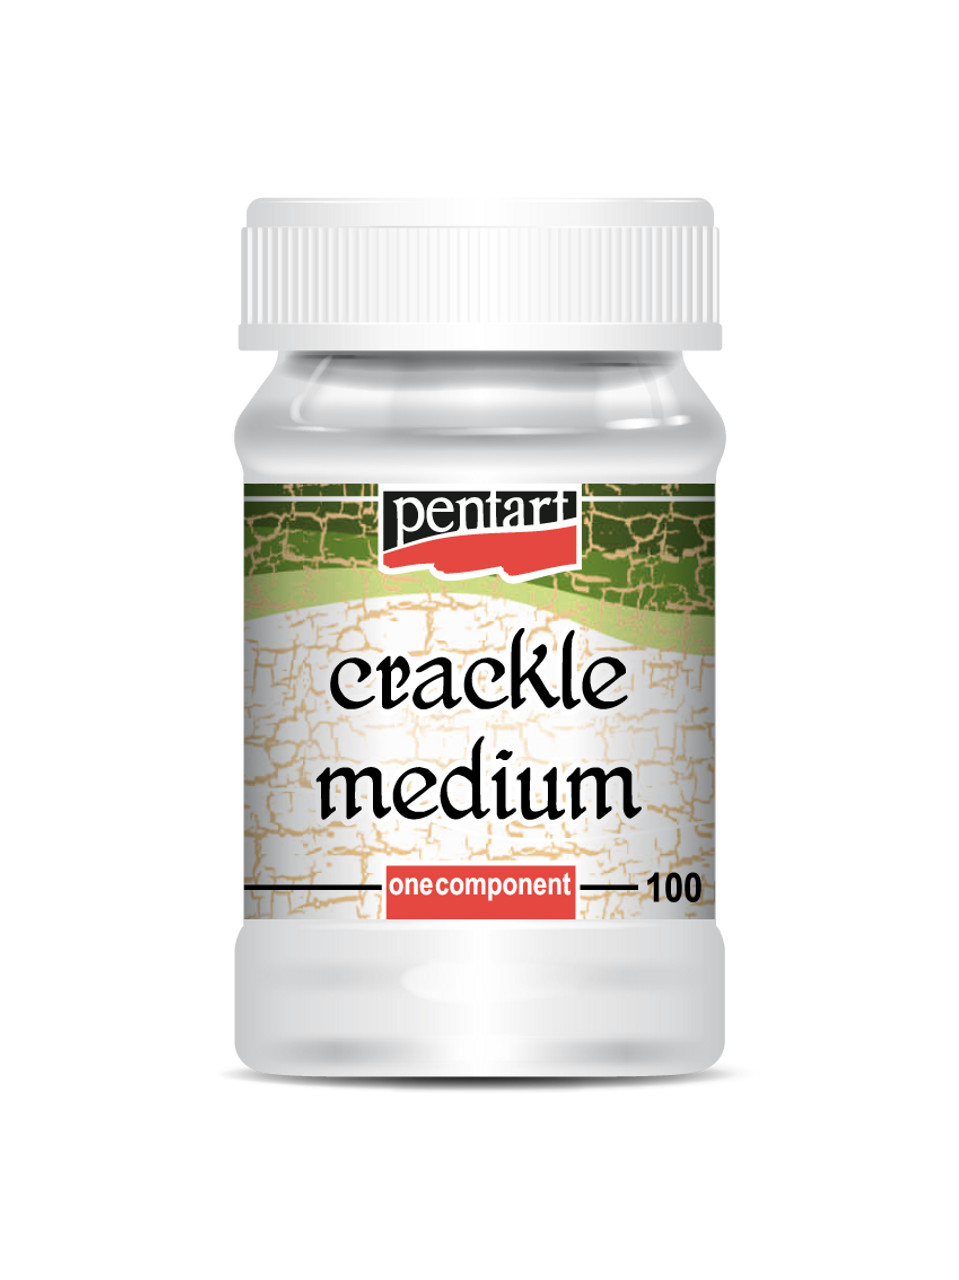 Pentart Crackle Medium-One Component